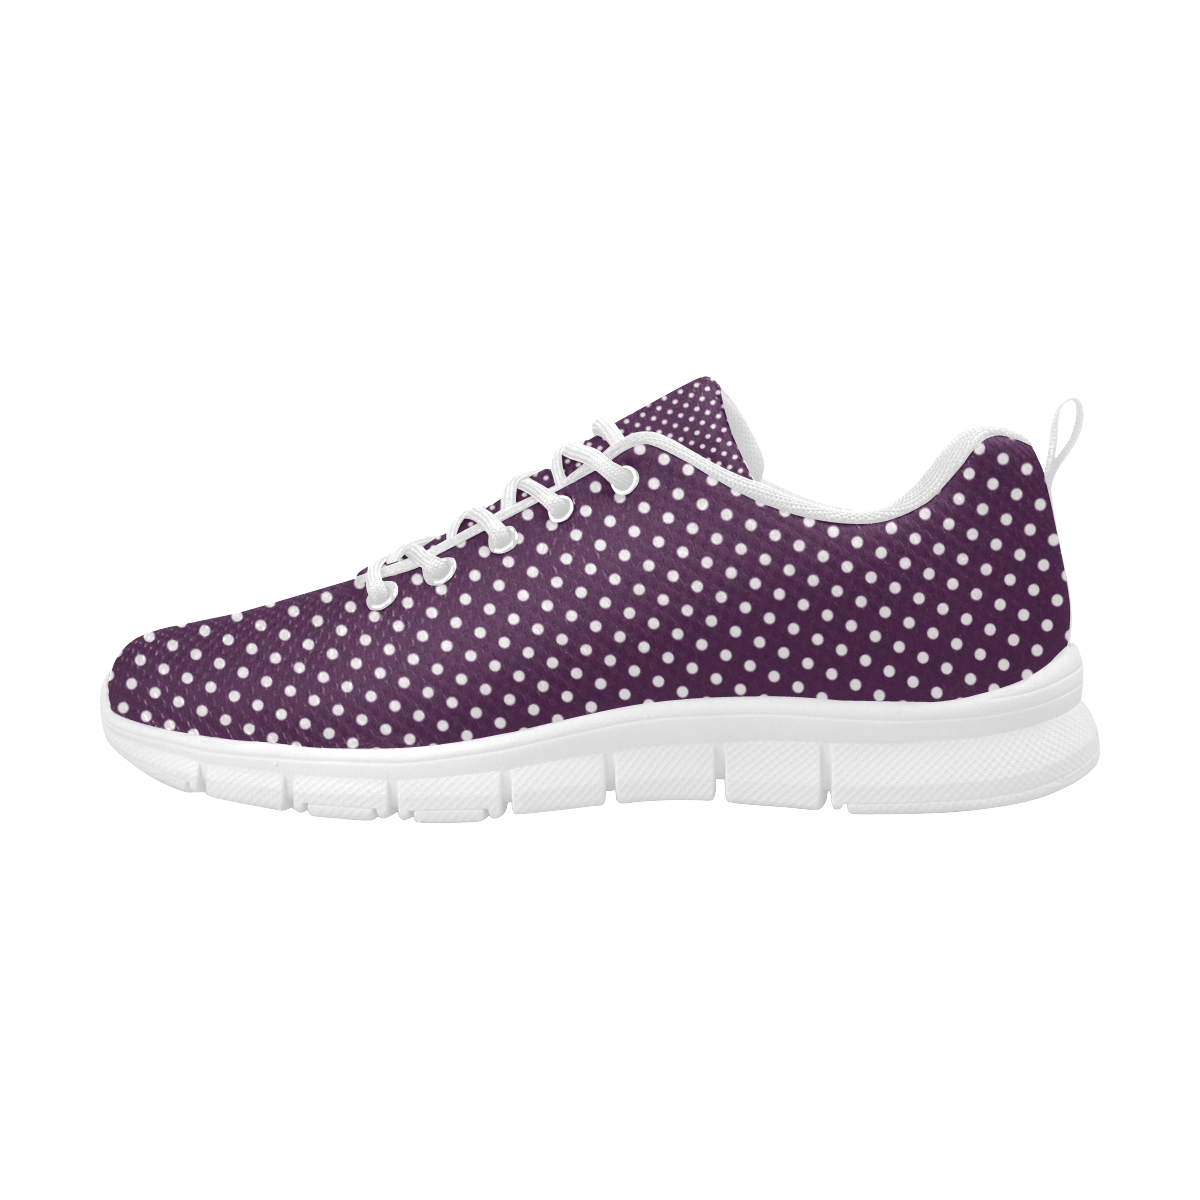 Burgundy polka dots Women's Breathable Running Shoes (Model 055)